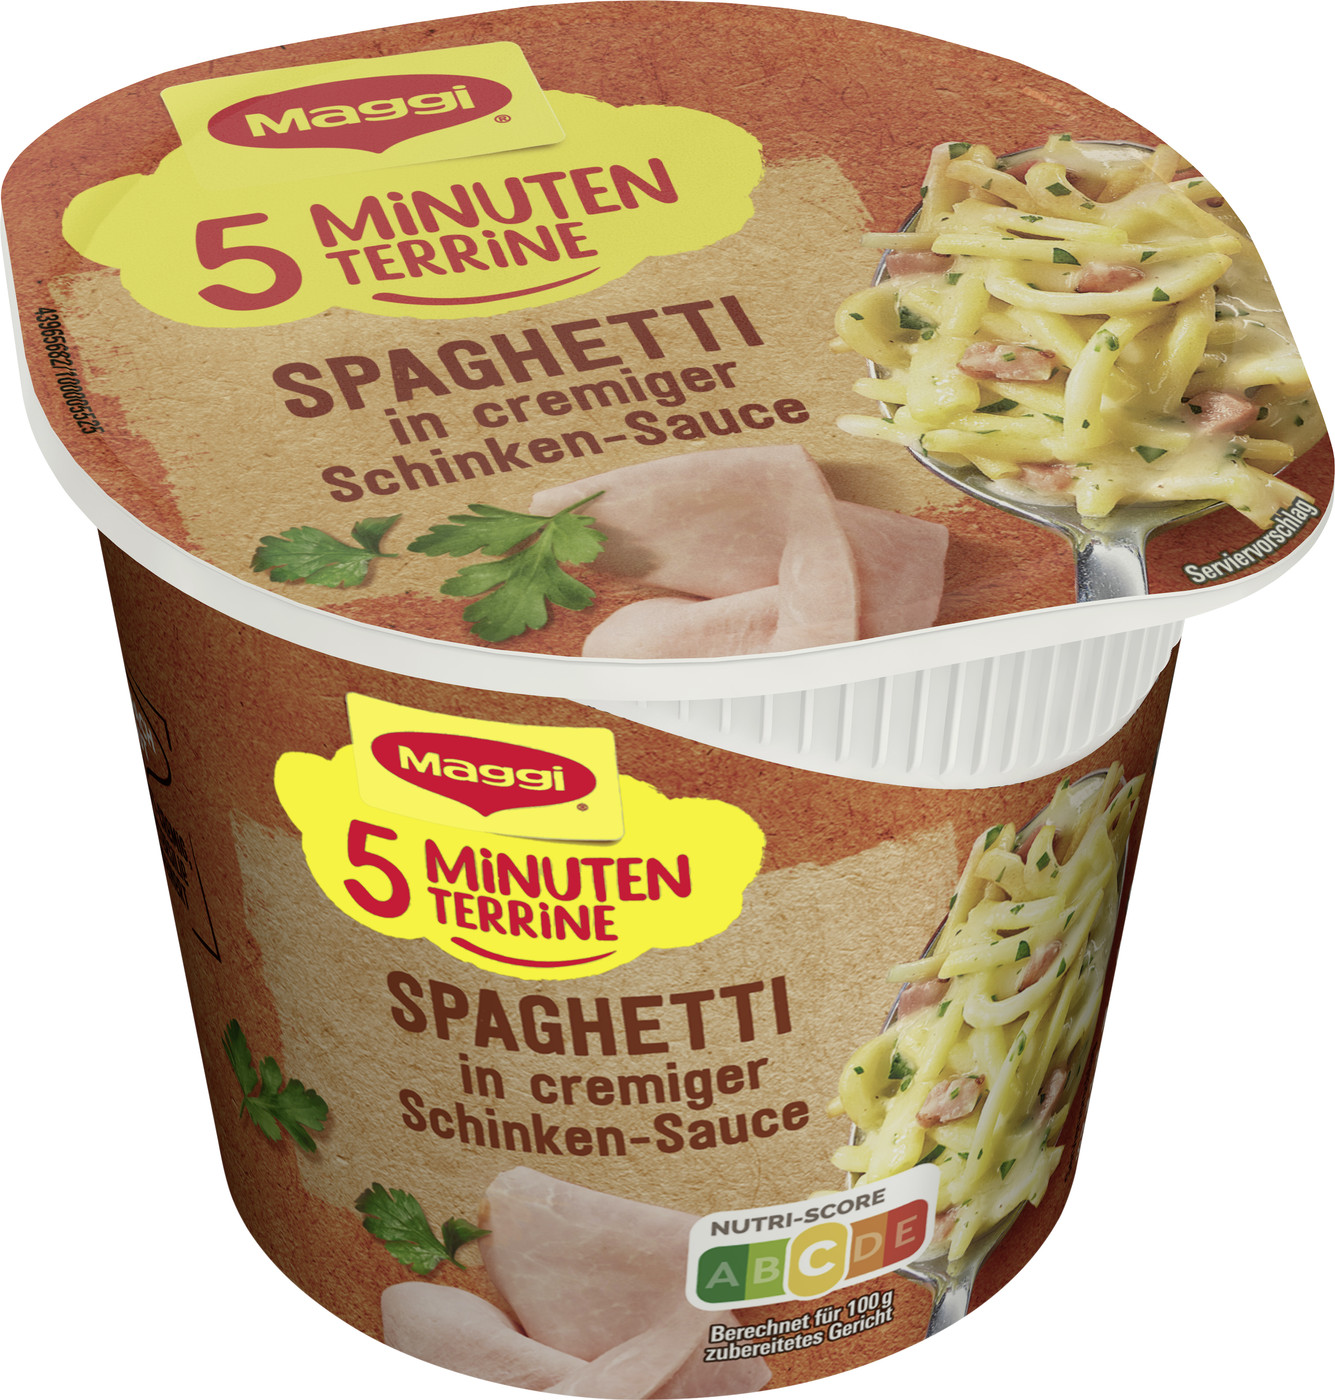 Maggi 5 Minuten Terrine Spaghetti in cremiger Schinkensauce 64G